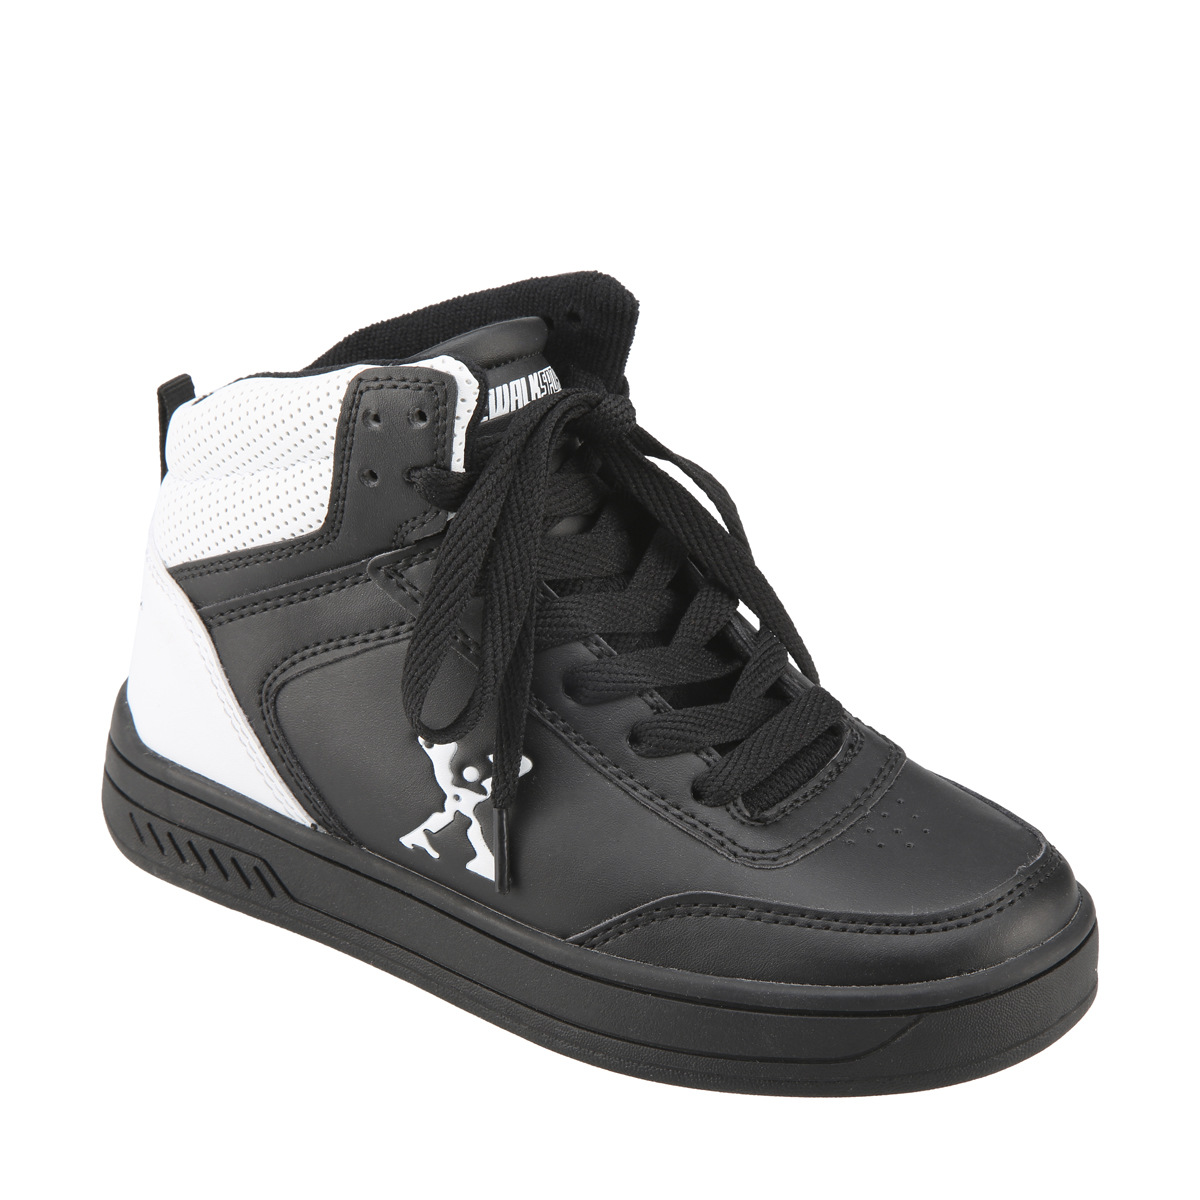 Sidewalk Sports Size 3 Black Skate Shoes